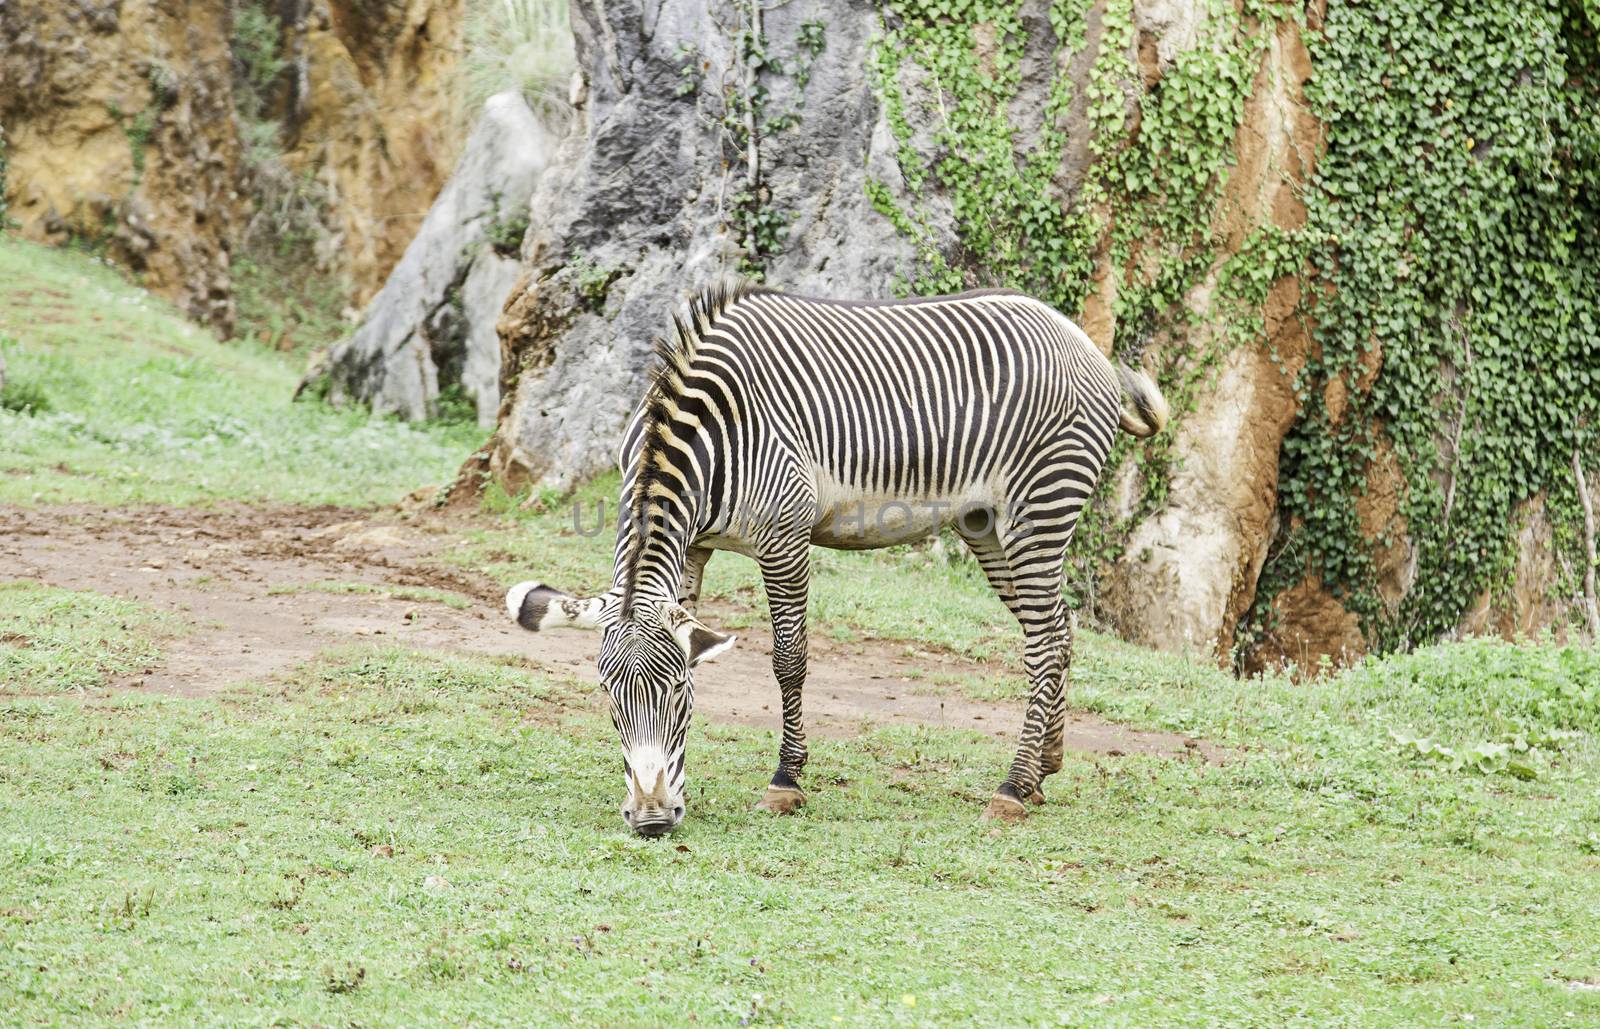 Wild zebras in the wild by esebene